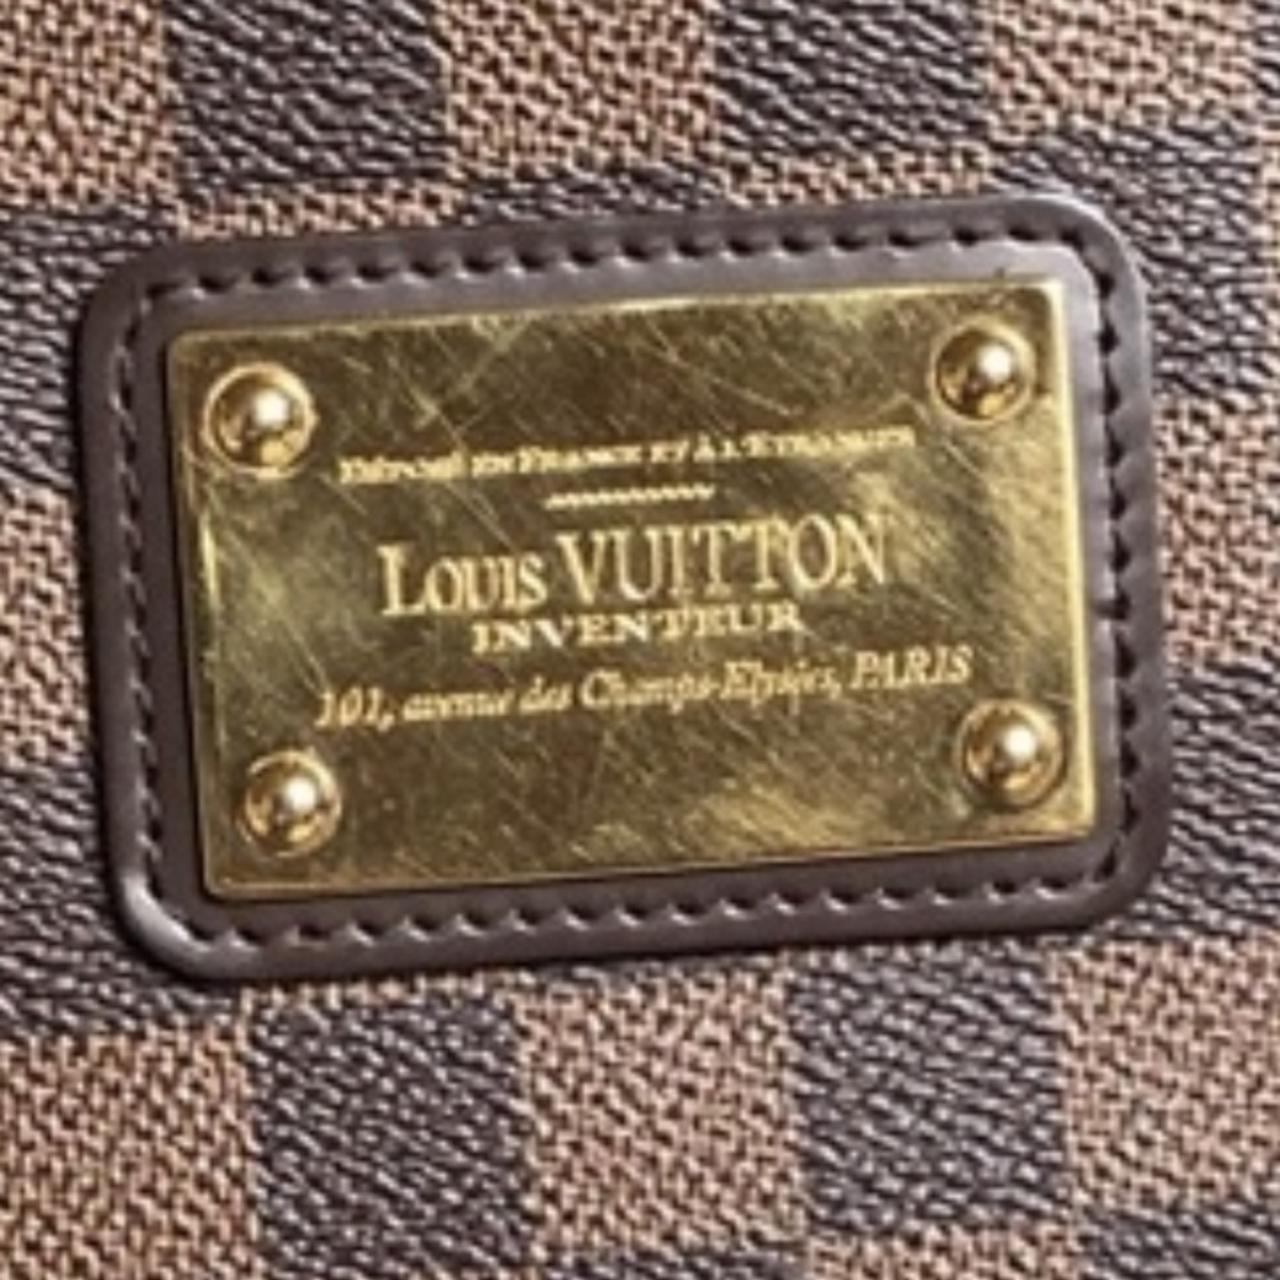 Authentic LV Eva Monogram clutch Used but still good - Depop